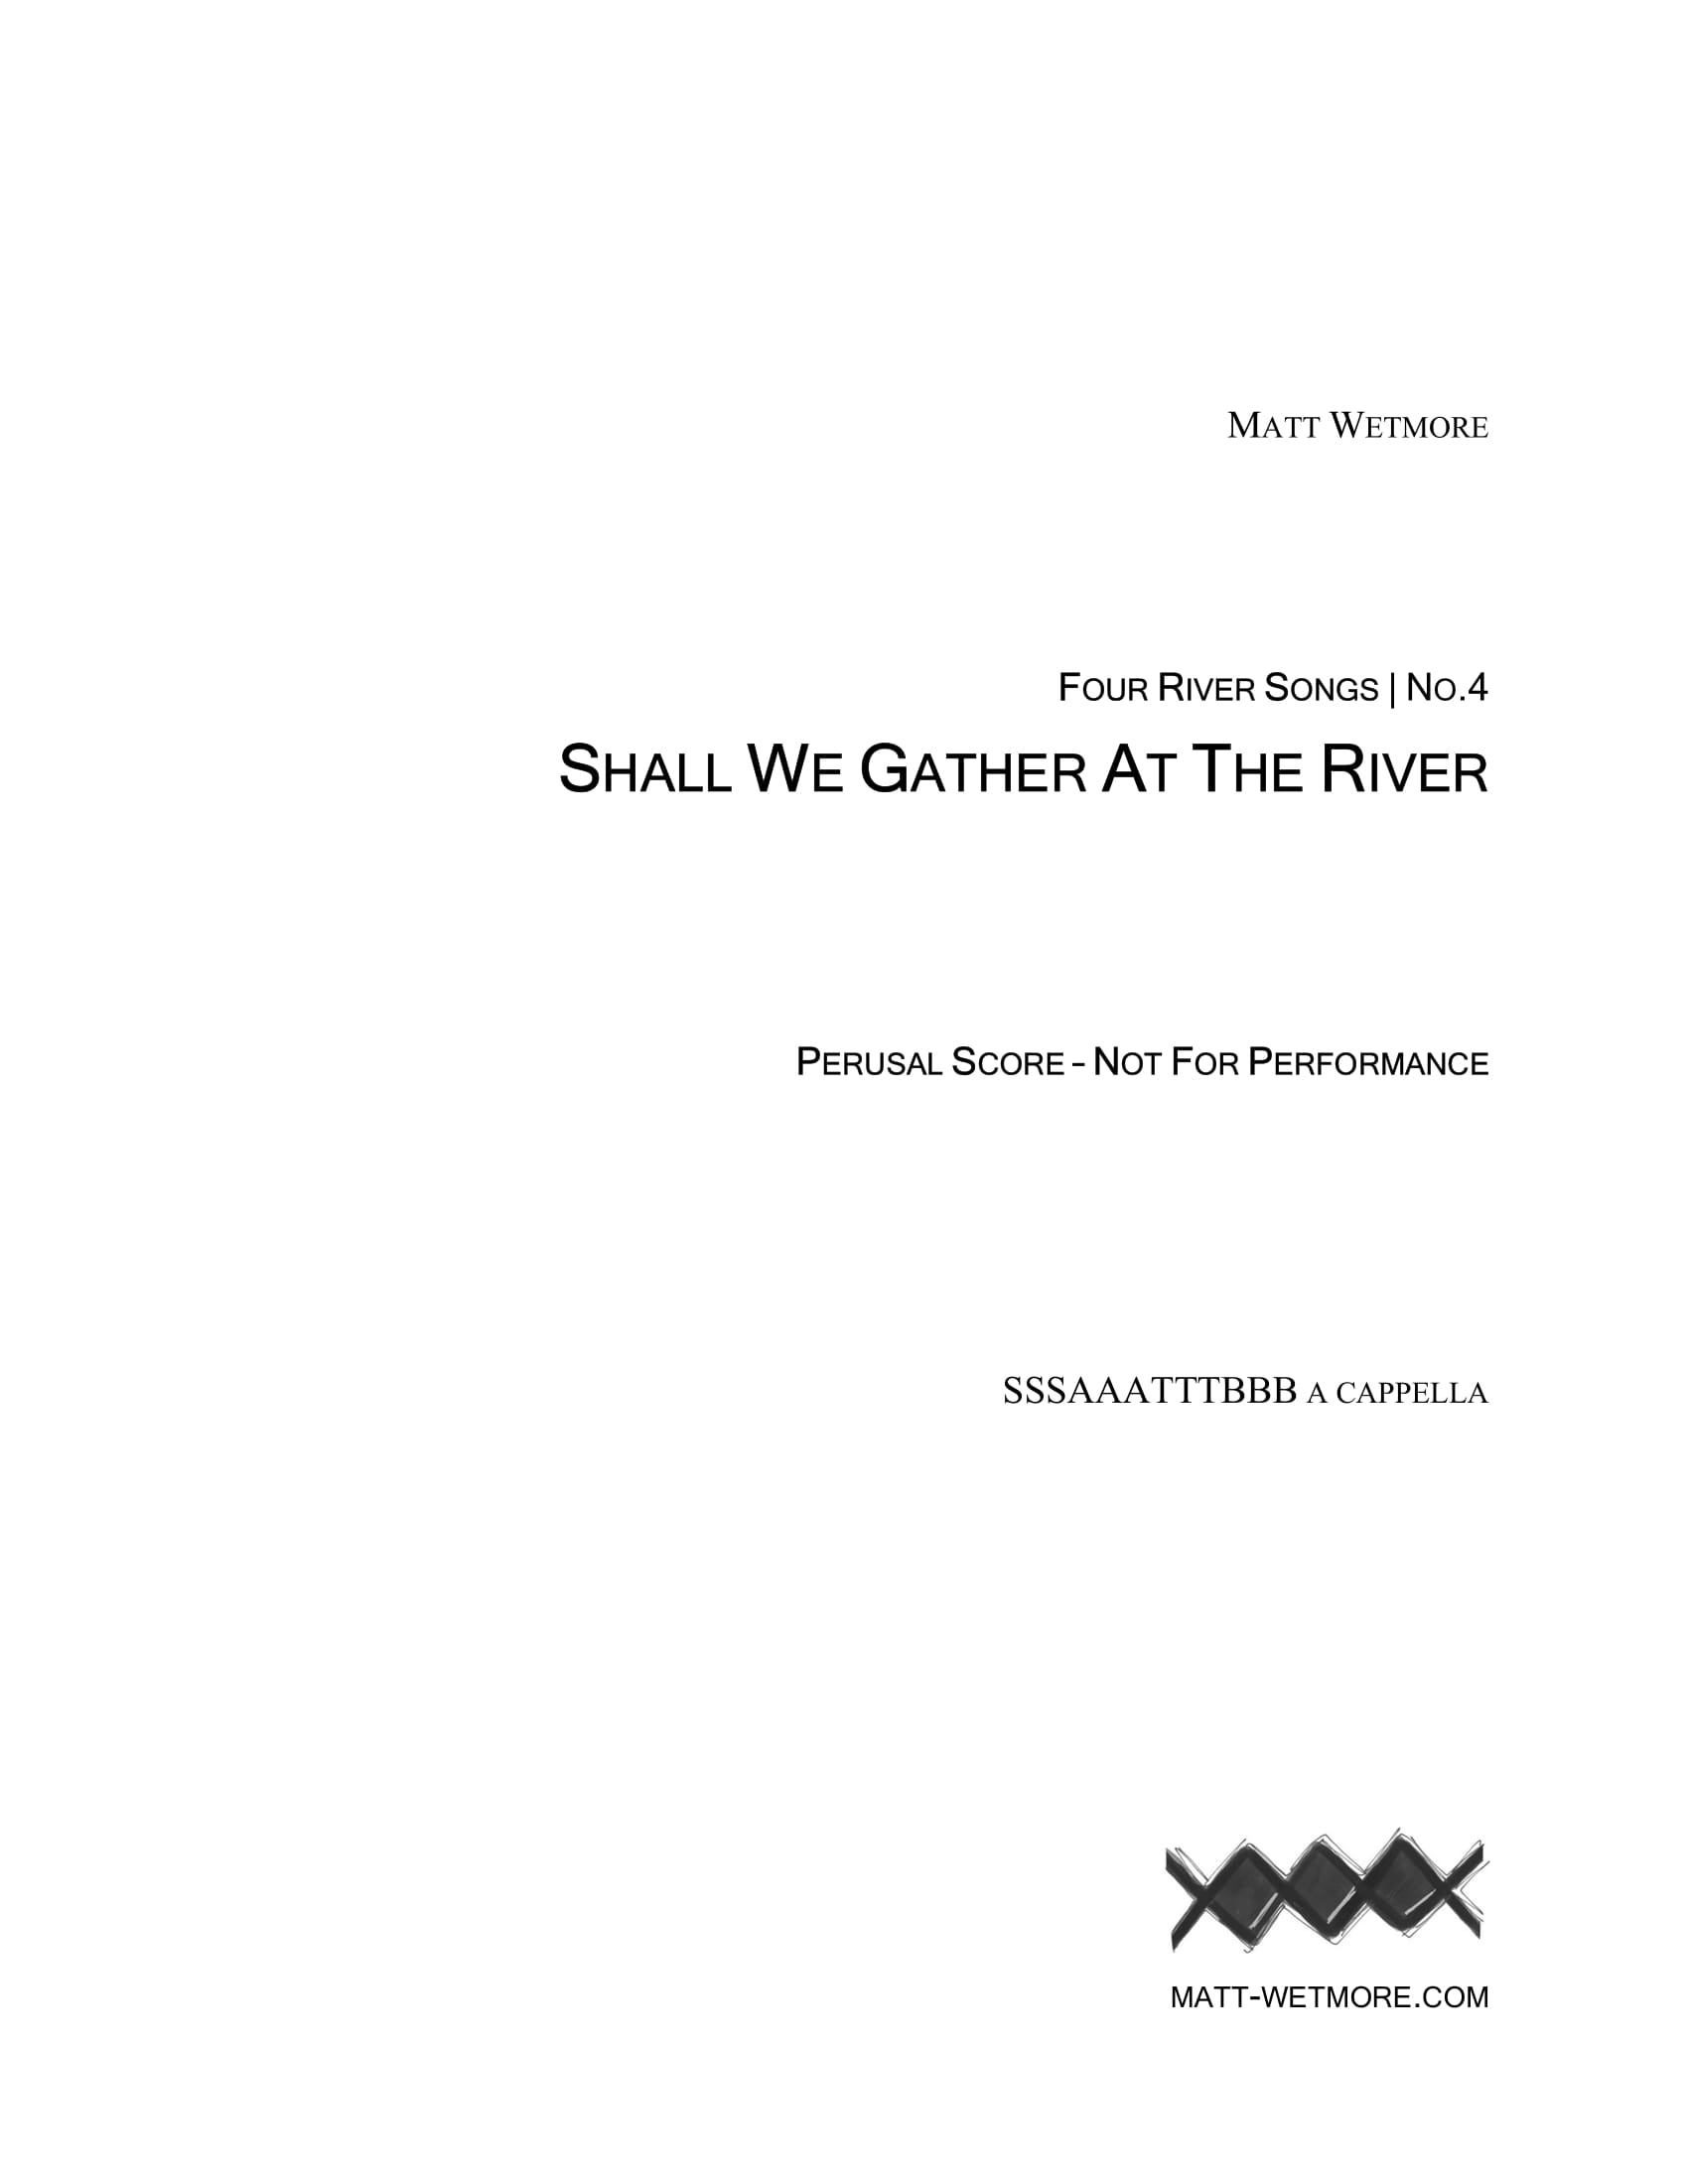 Shall We Gather At The River - Perusal-01.jpg